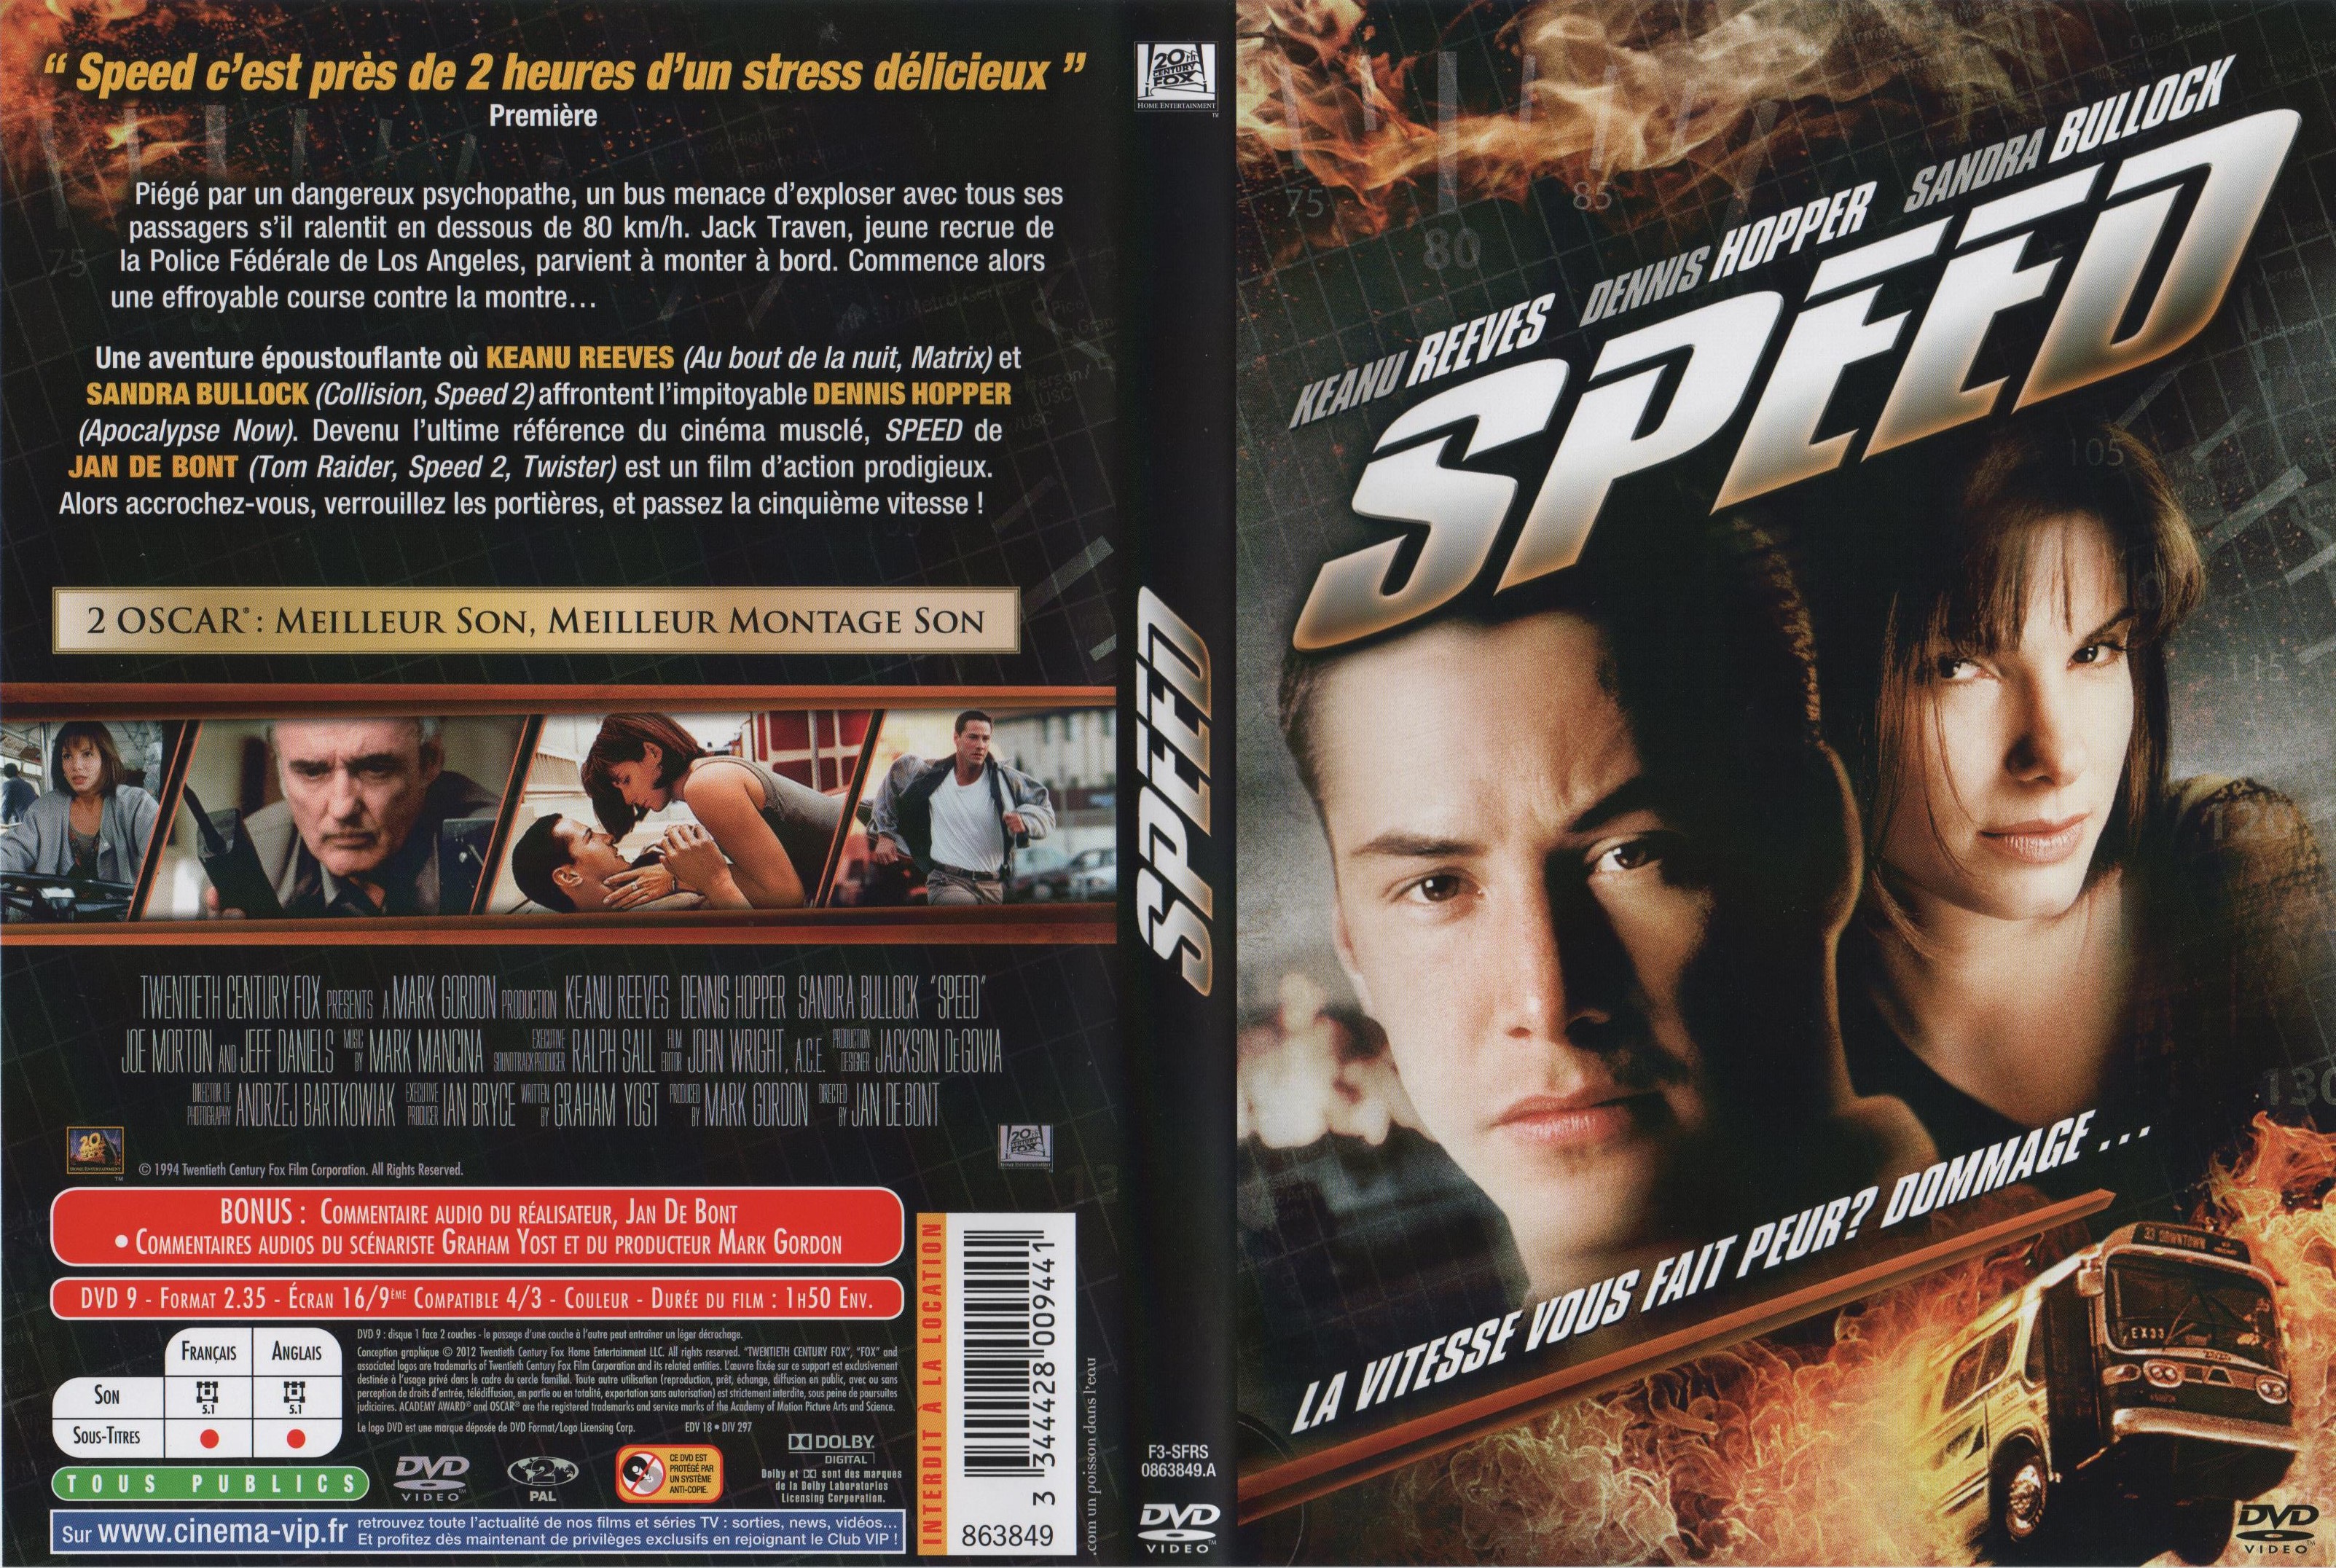 Jaquette DVD Speed v3